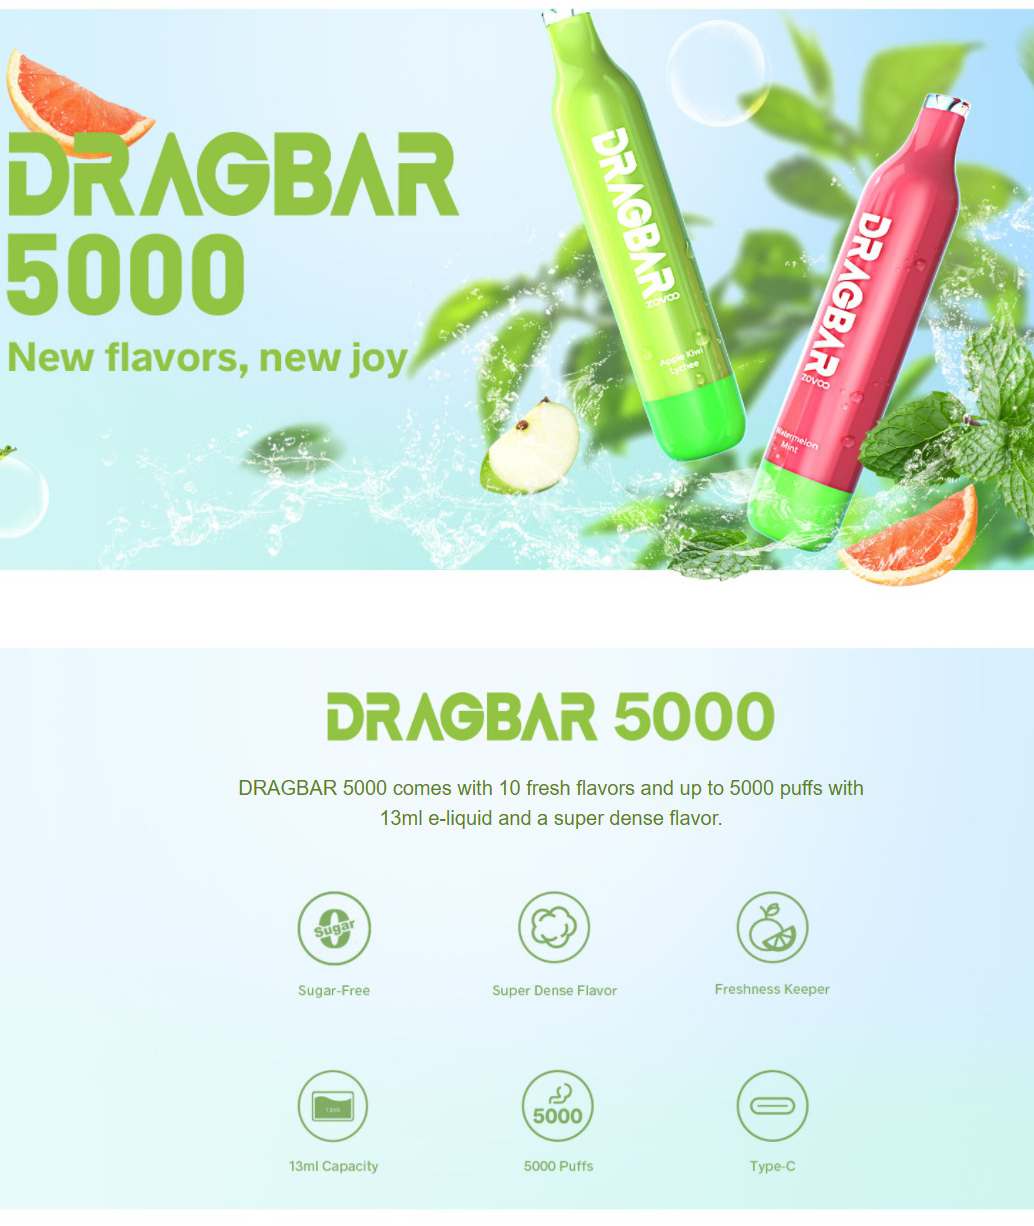 Dragbar 5000